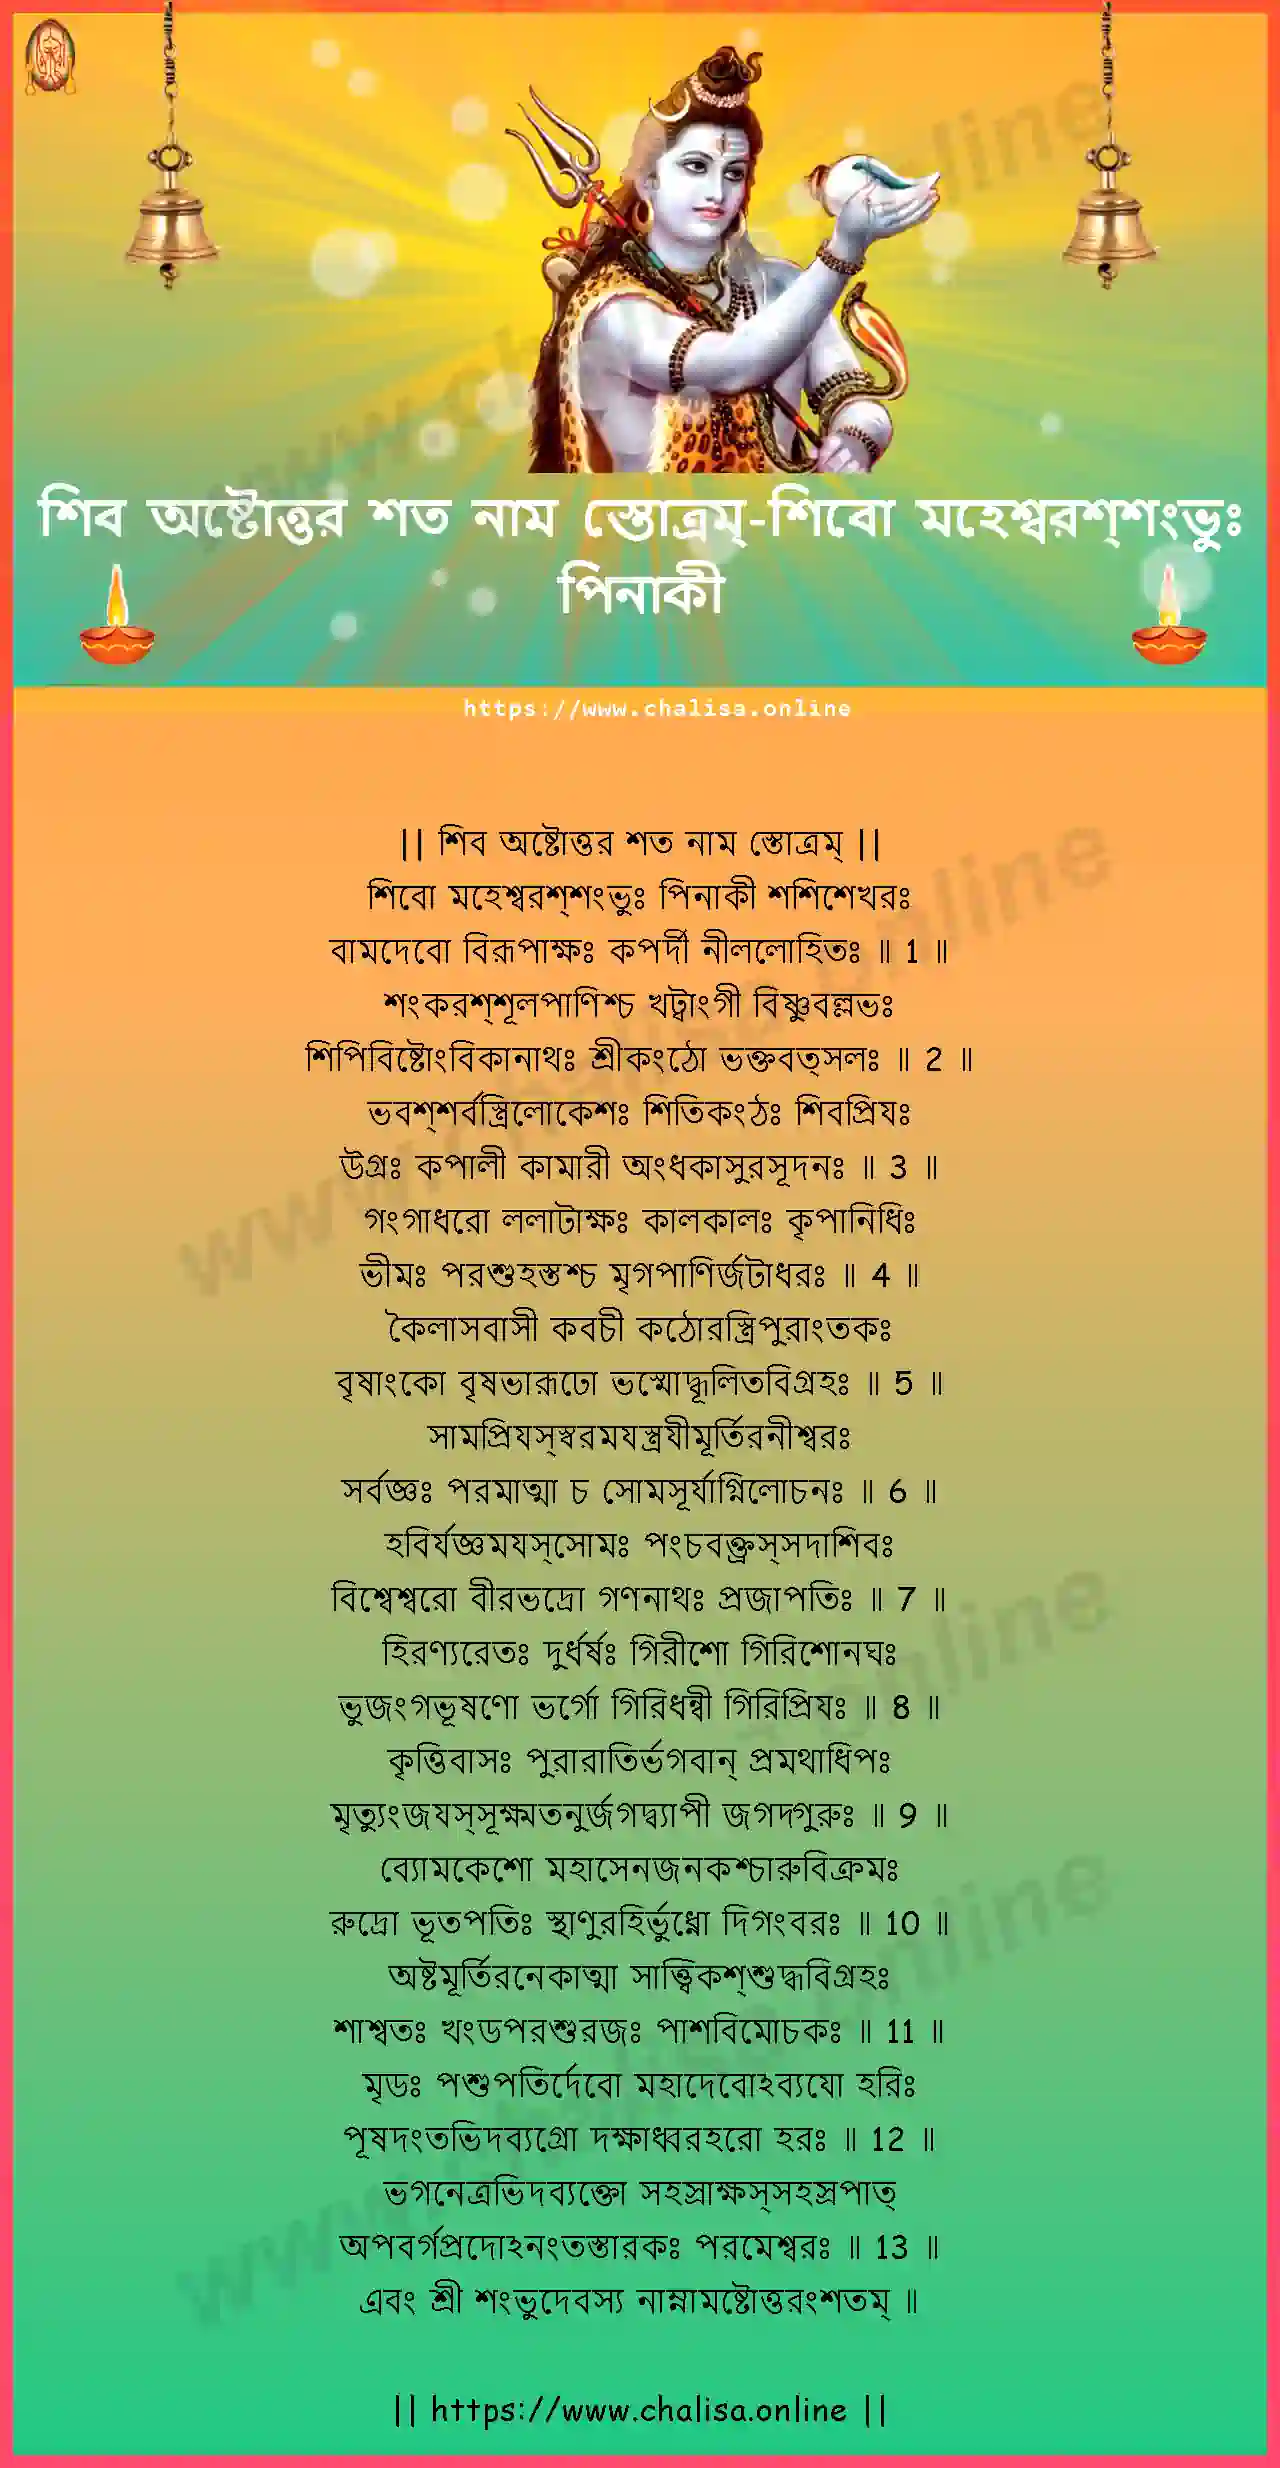 sivo-mahesvarassambhuh-shiva-ashtottara-sata-nama-stotram-assamese-assamese-lyrics-download